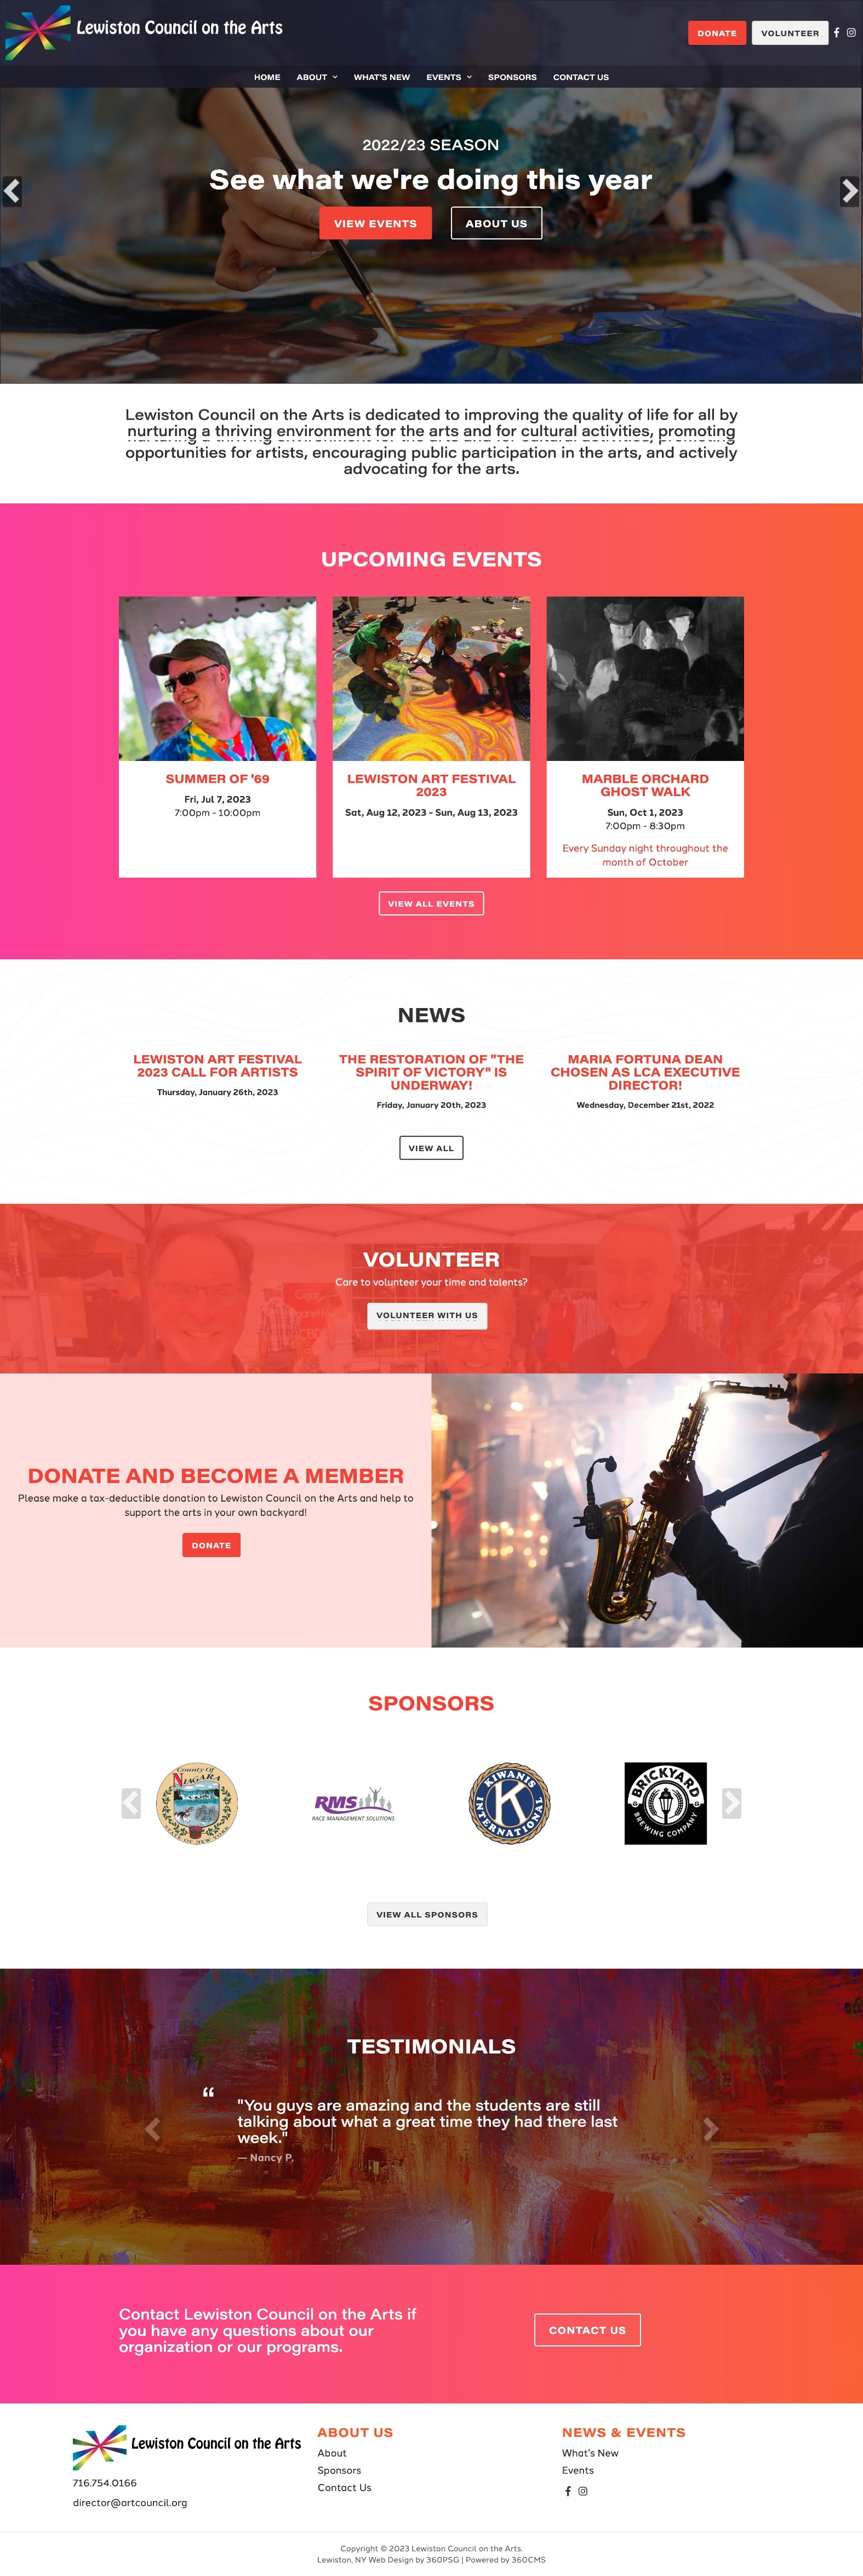 Lewiston Council on the Arts Website - Desktop